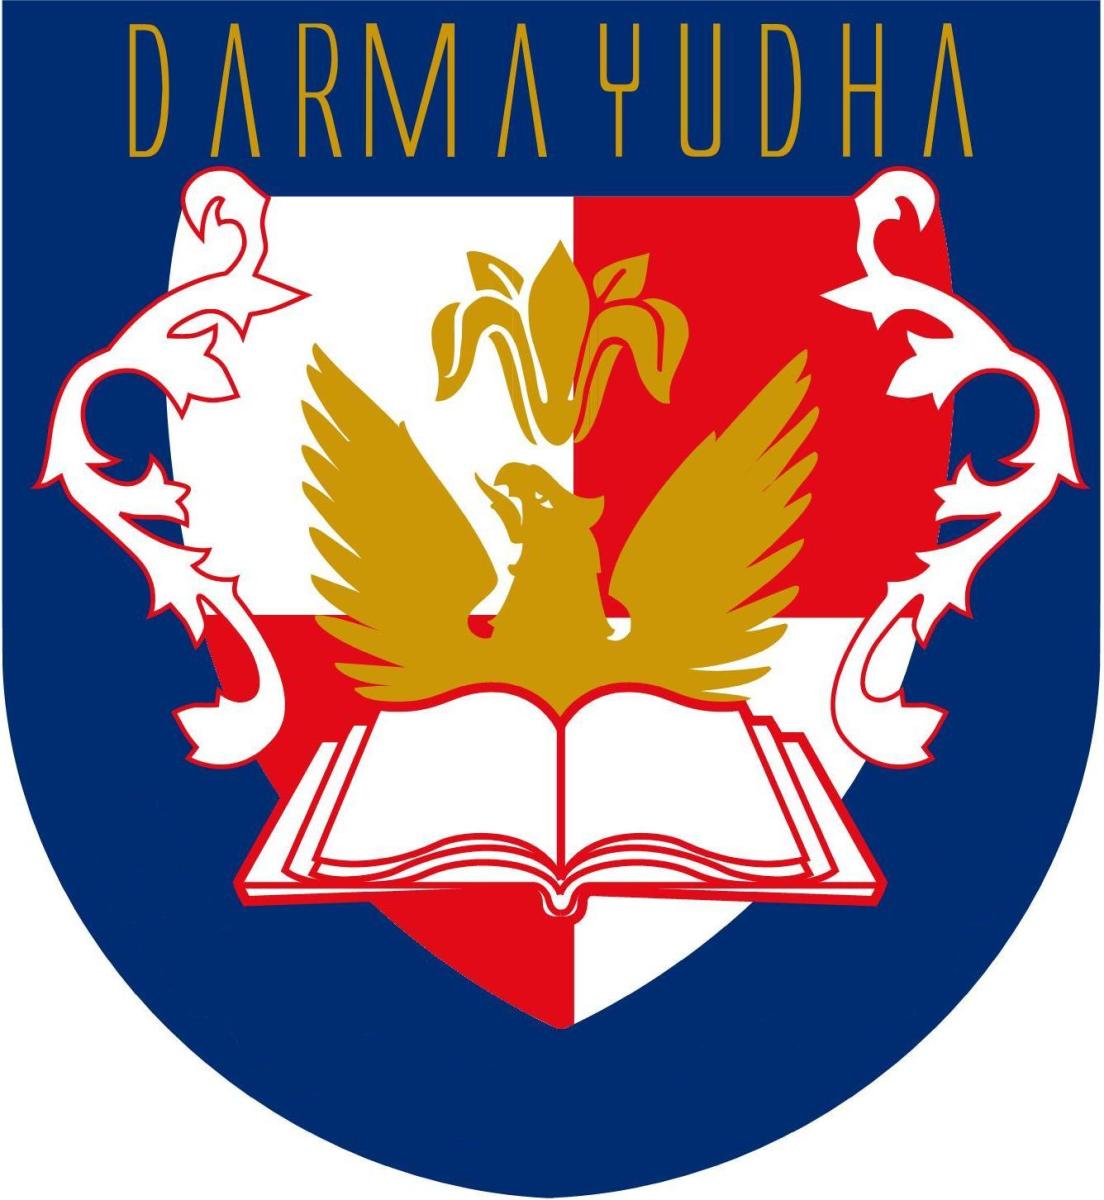 Darma Logo - Logo Darma Yudha